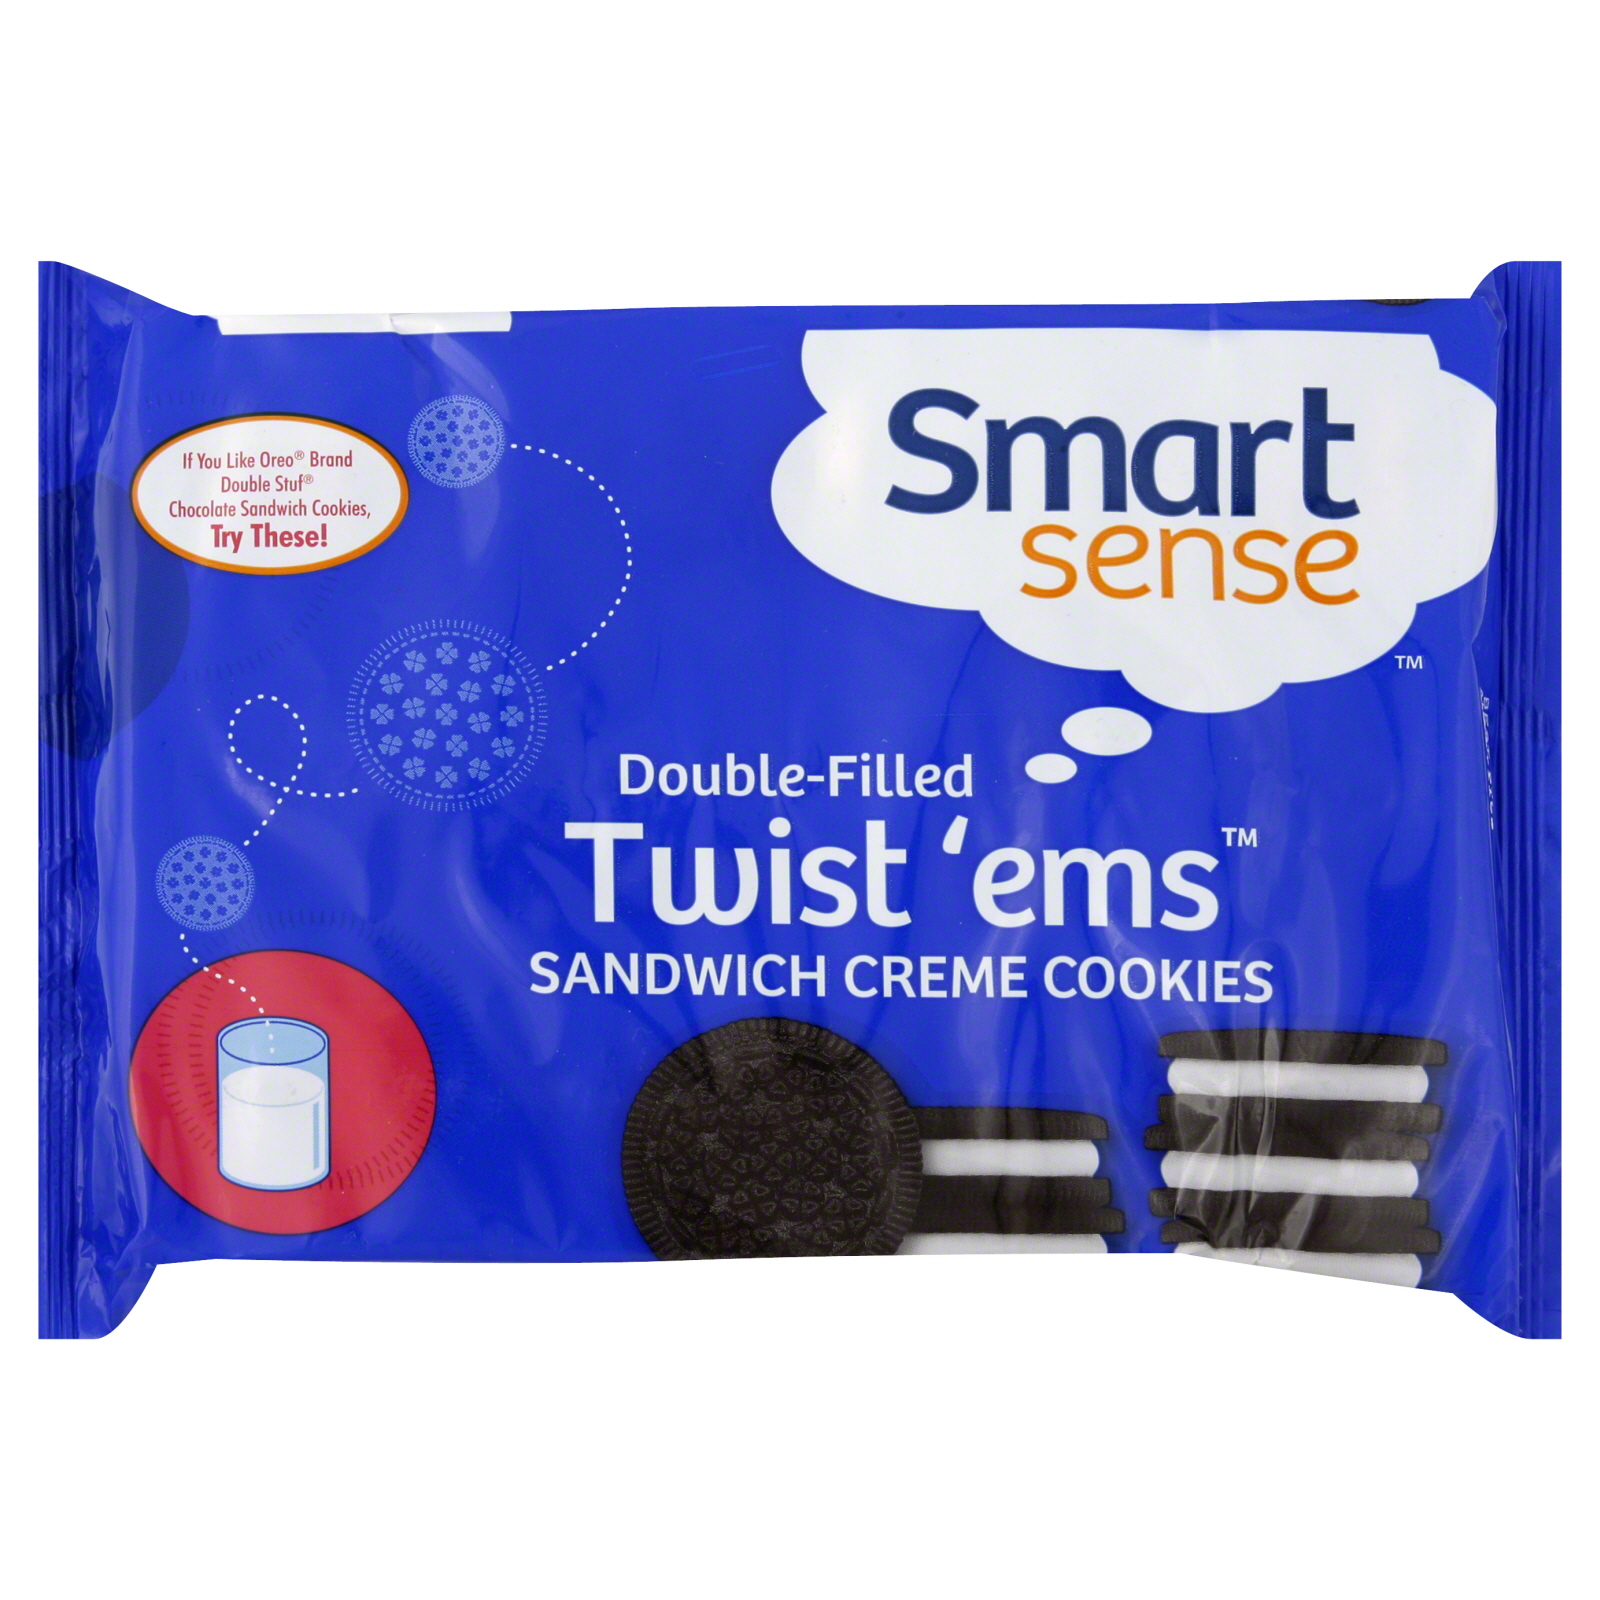 Smart Sense Cookies, Sandwich Creme, Double-Filled, Twist 'ems 18 oz (1 lb 2 oz) 510 g